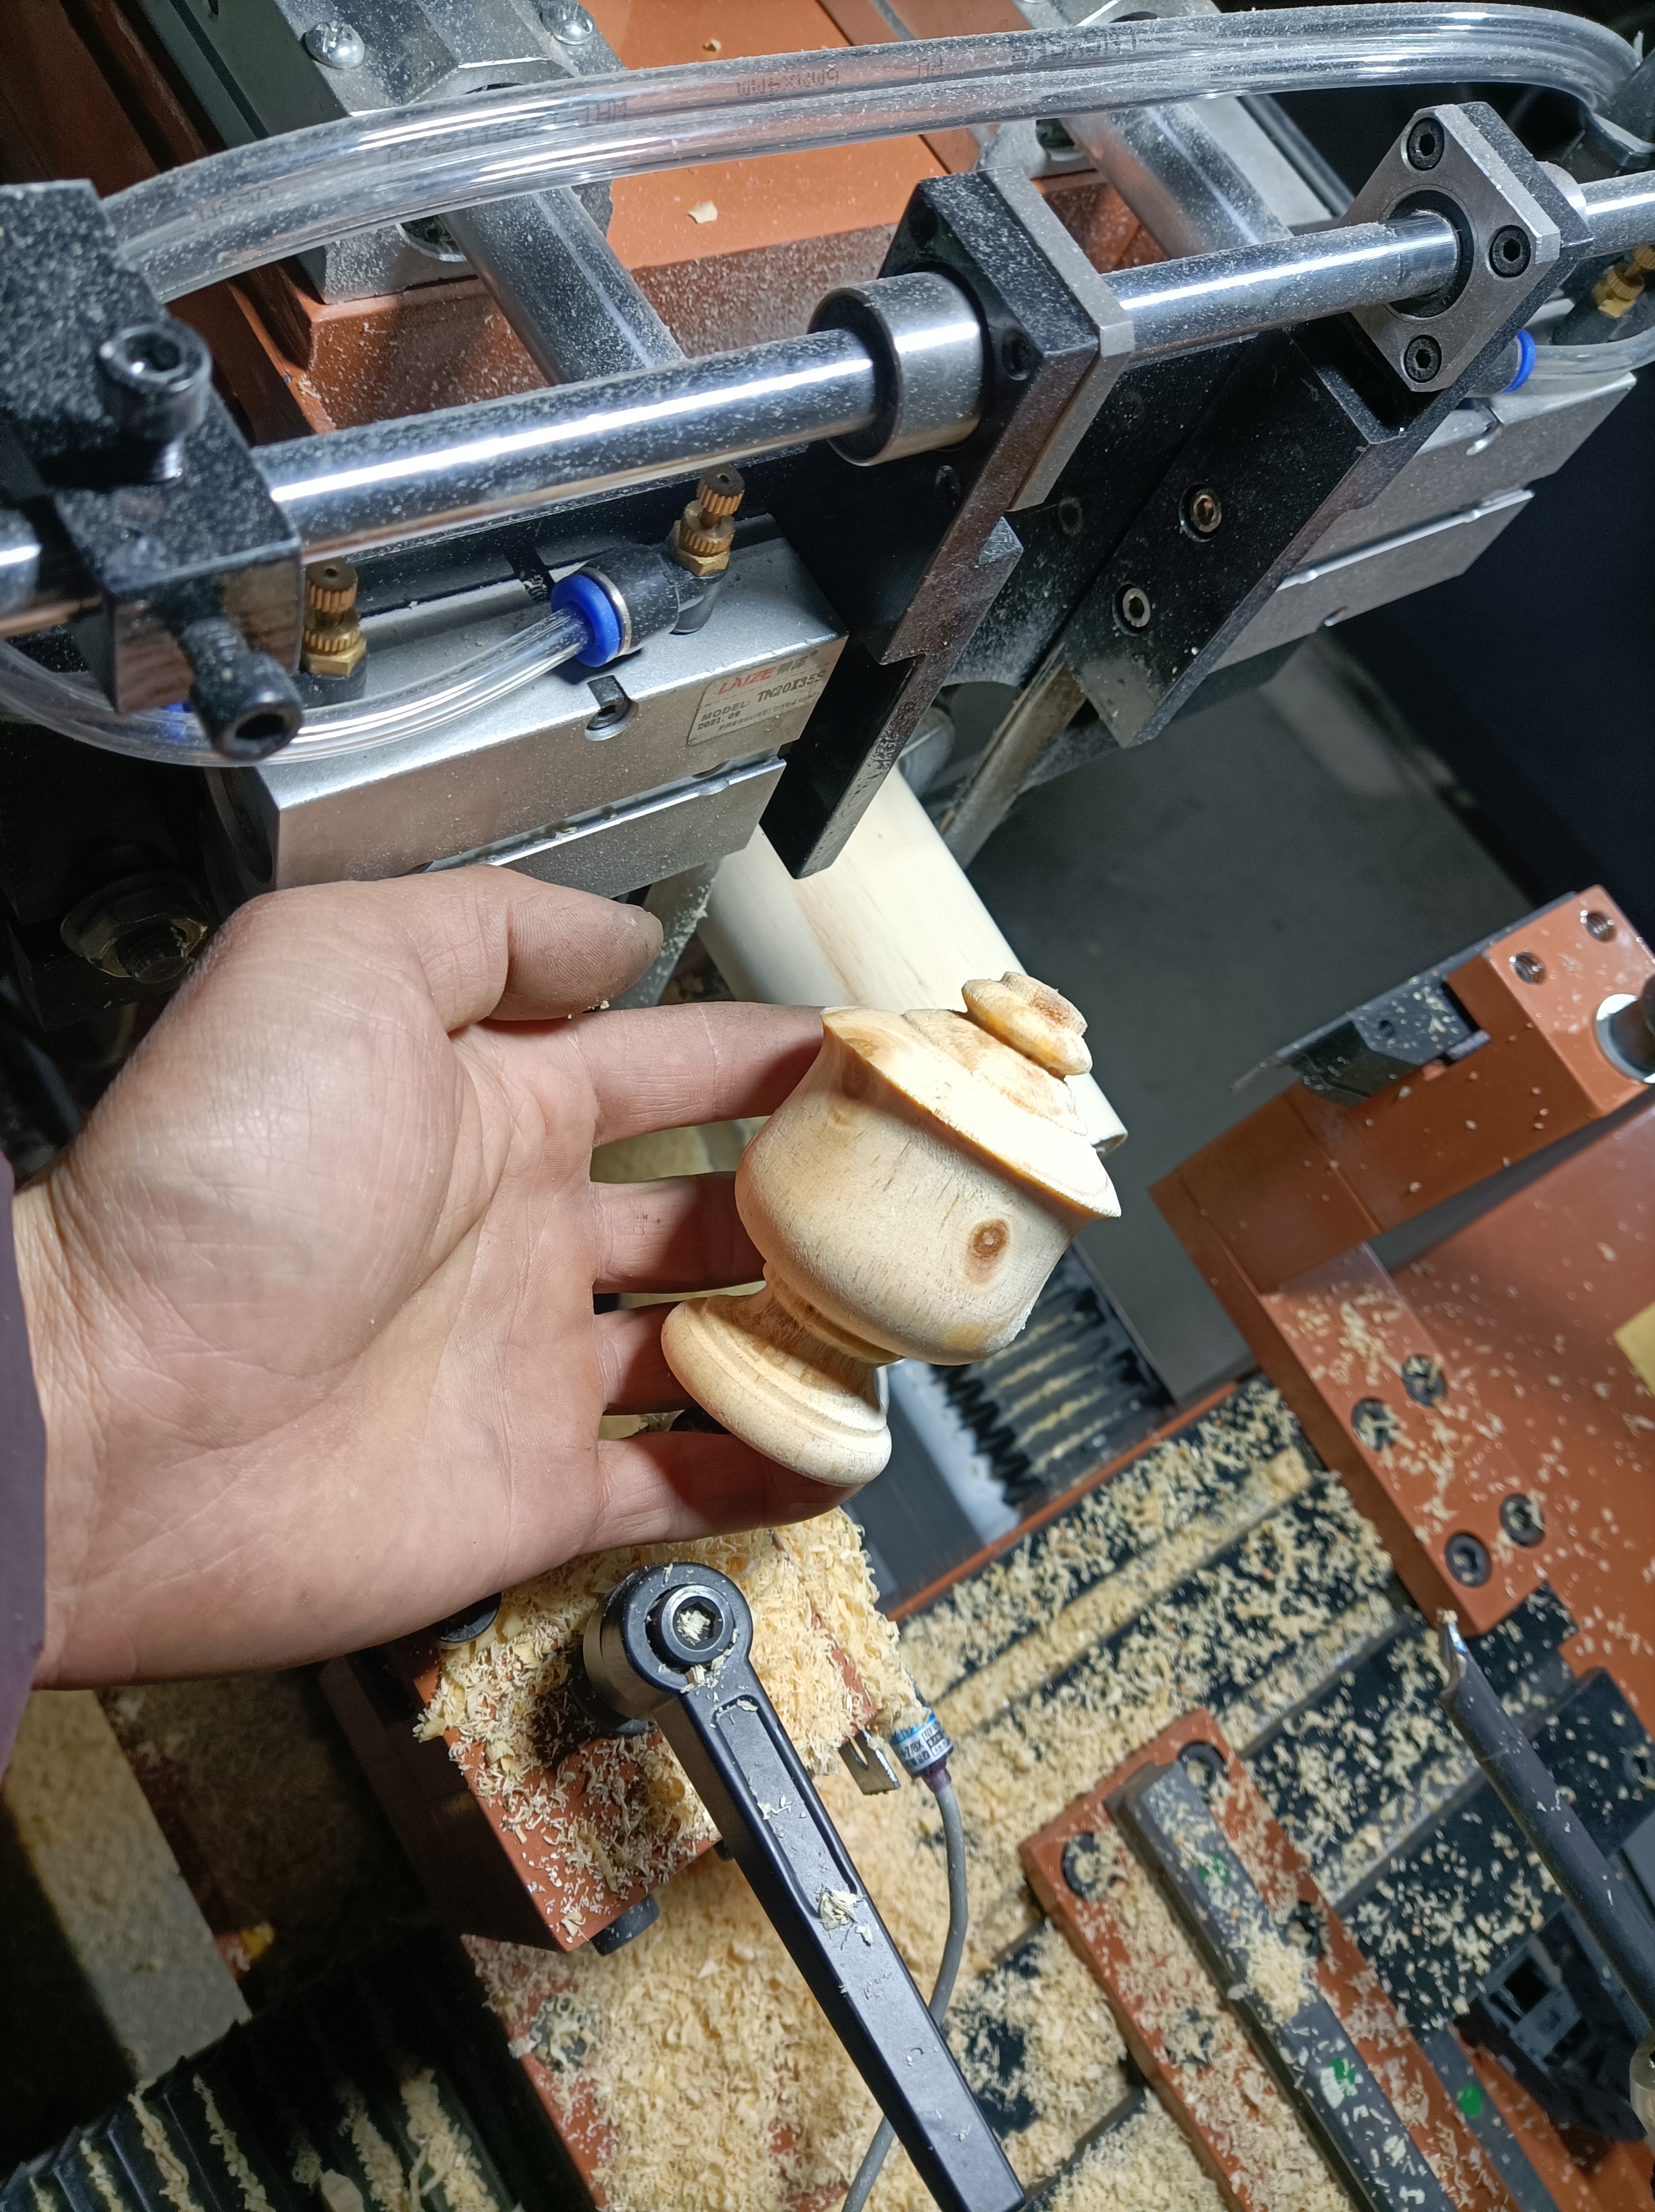 How to make Roman curtain rod head by auto feeding wood lathe?